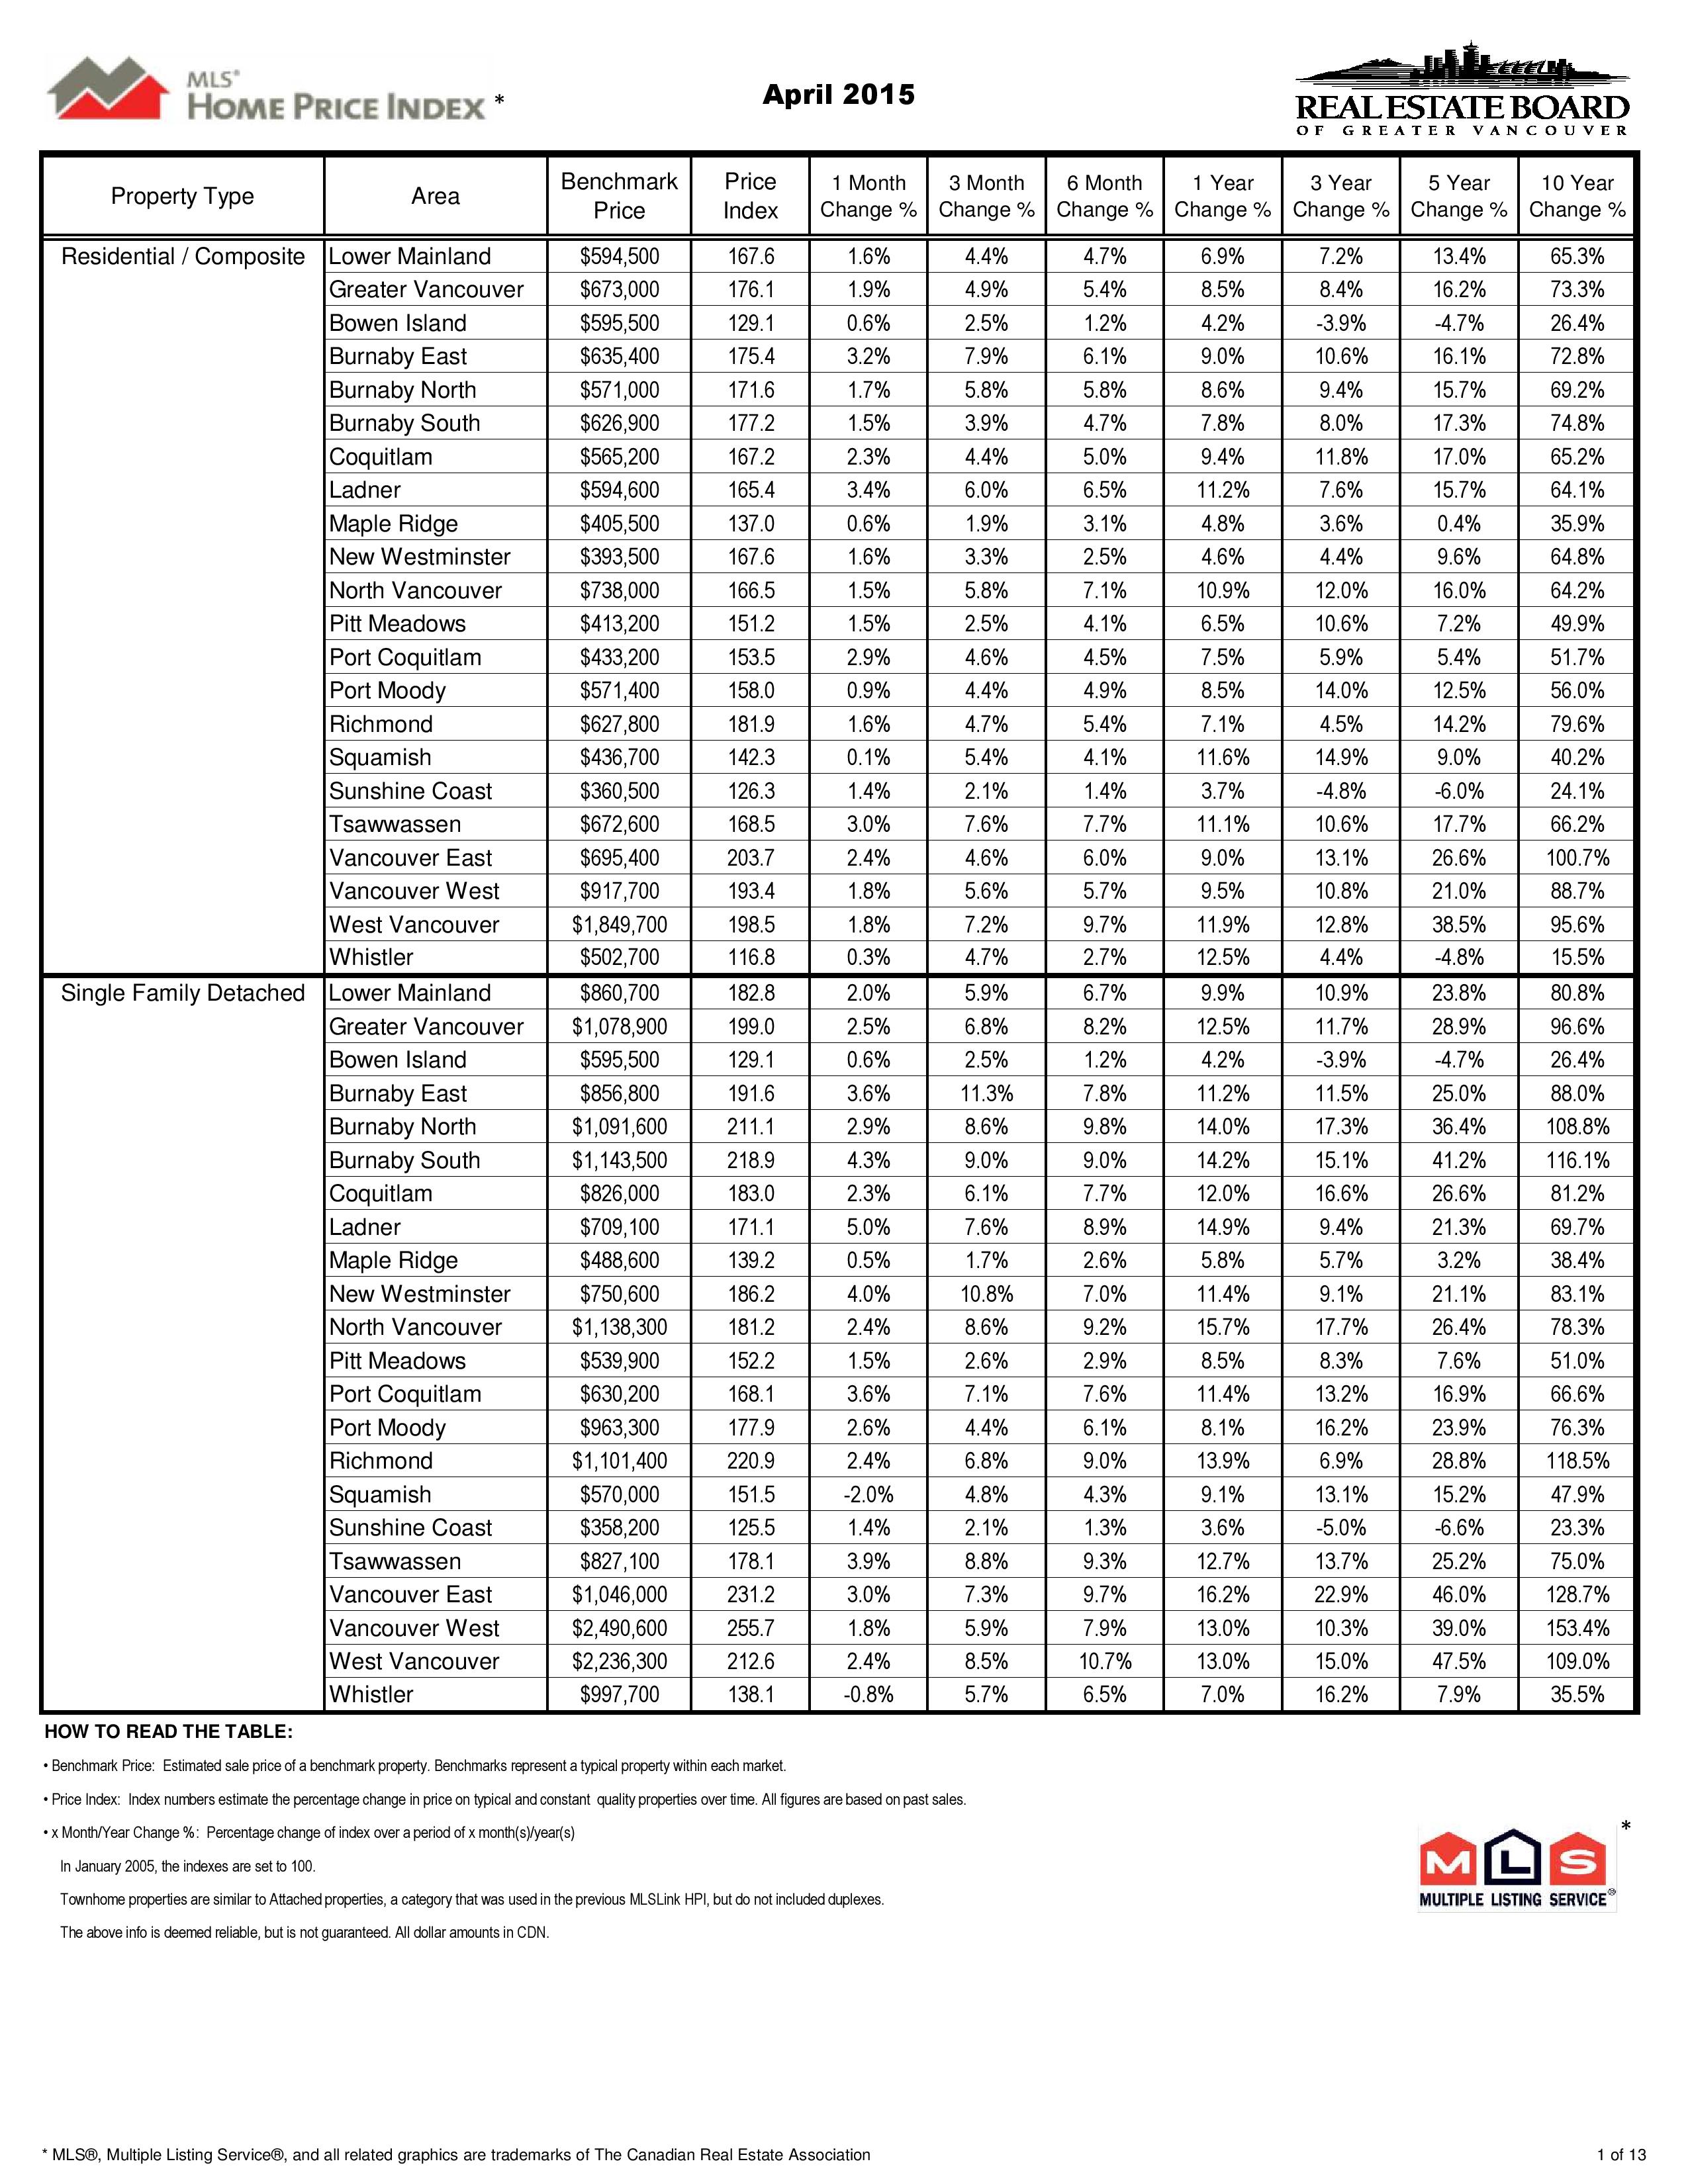 REBGV Stats Package April 2015 Mike Stewart Vancouver Realtor-page-003